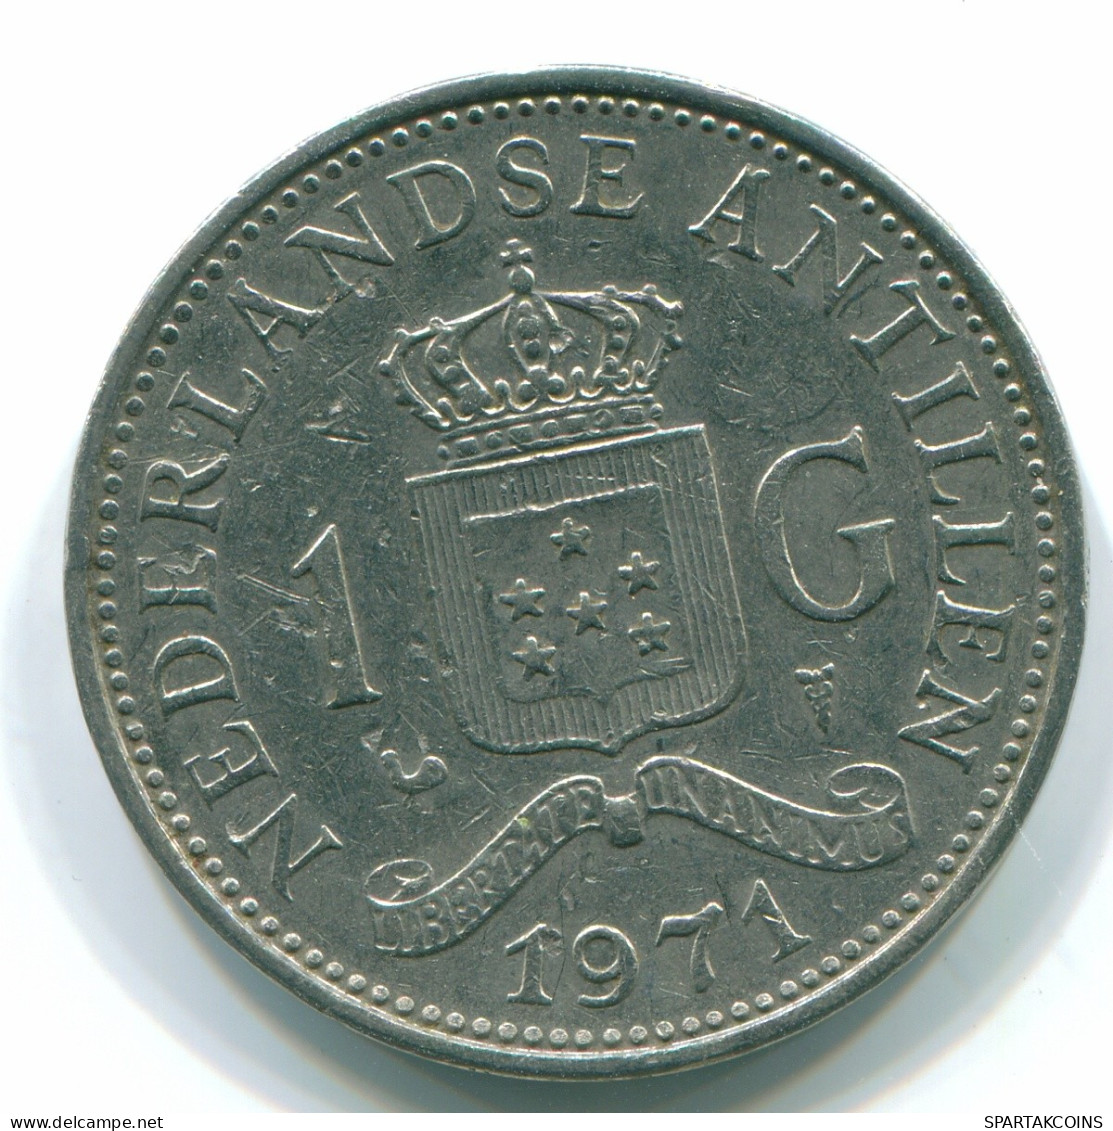 1 GULDEN 1971 NETHERLANDS ANTILLES Nickel Colonial Coin #S11988.U.A - Antilles Néerlandaises